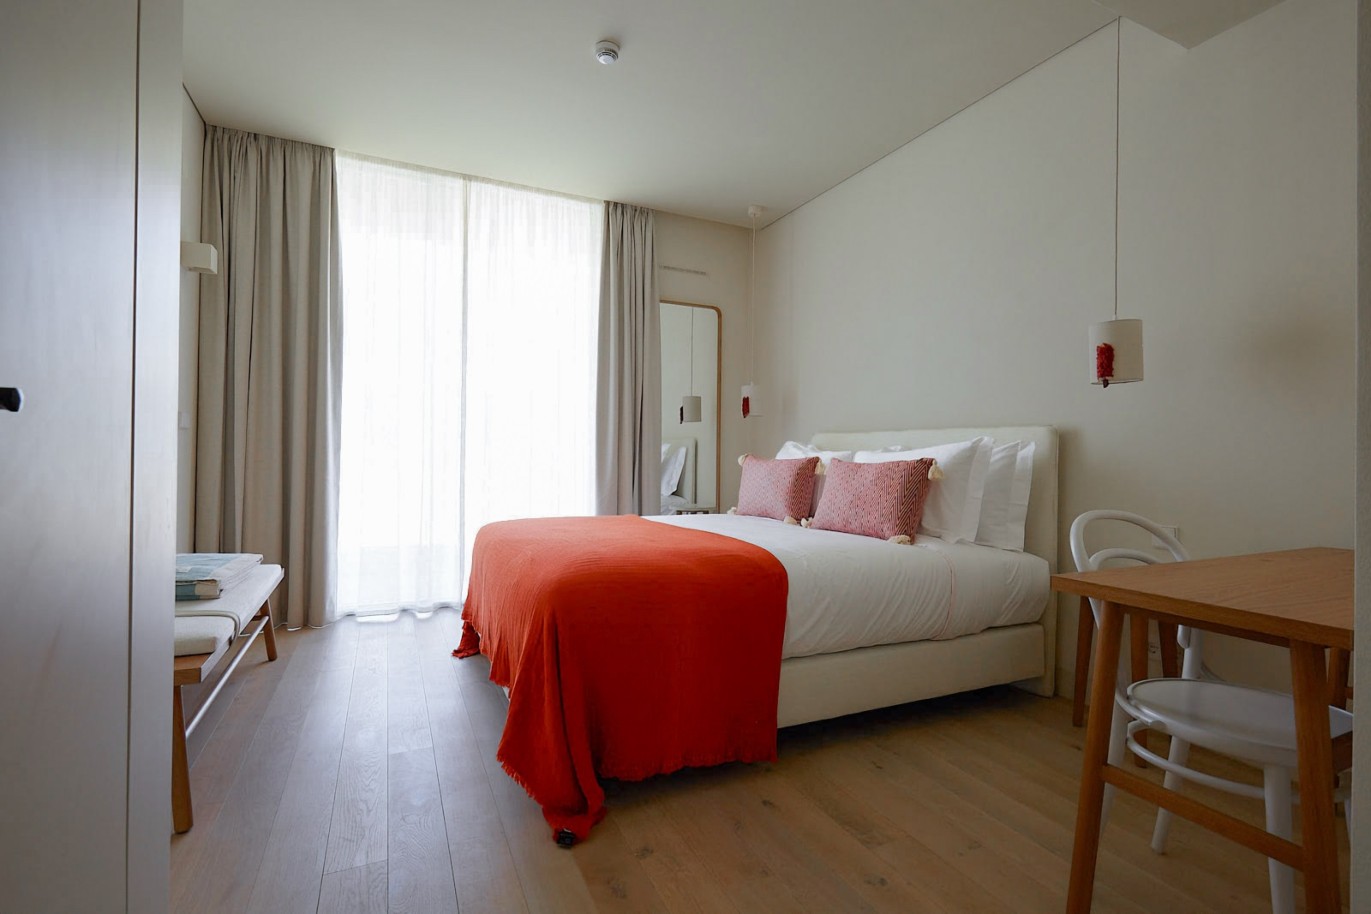 2 bedroom apartment in resort, for sale in Porches, Algarve_230771